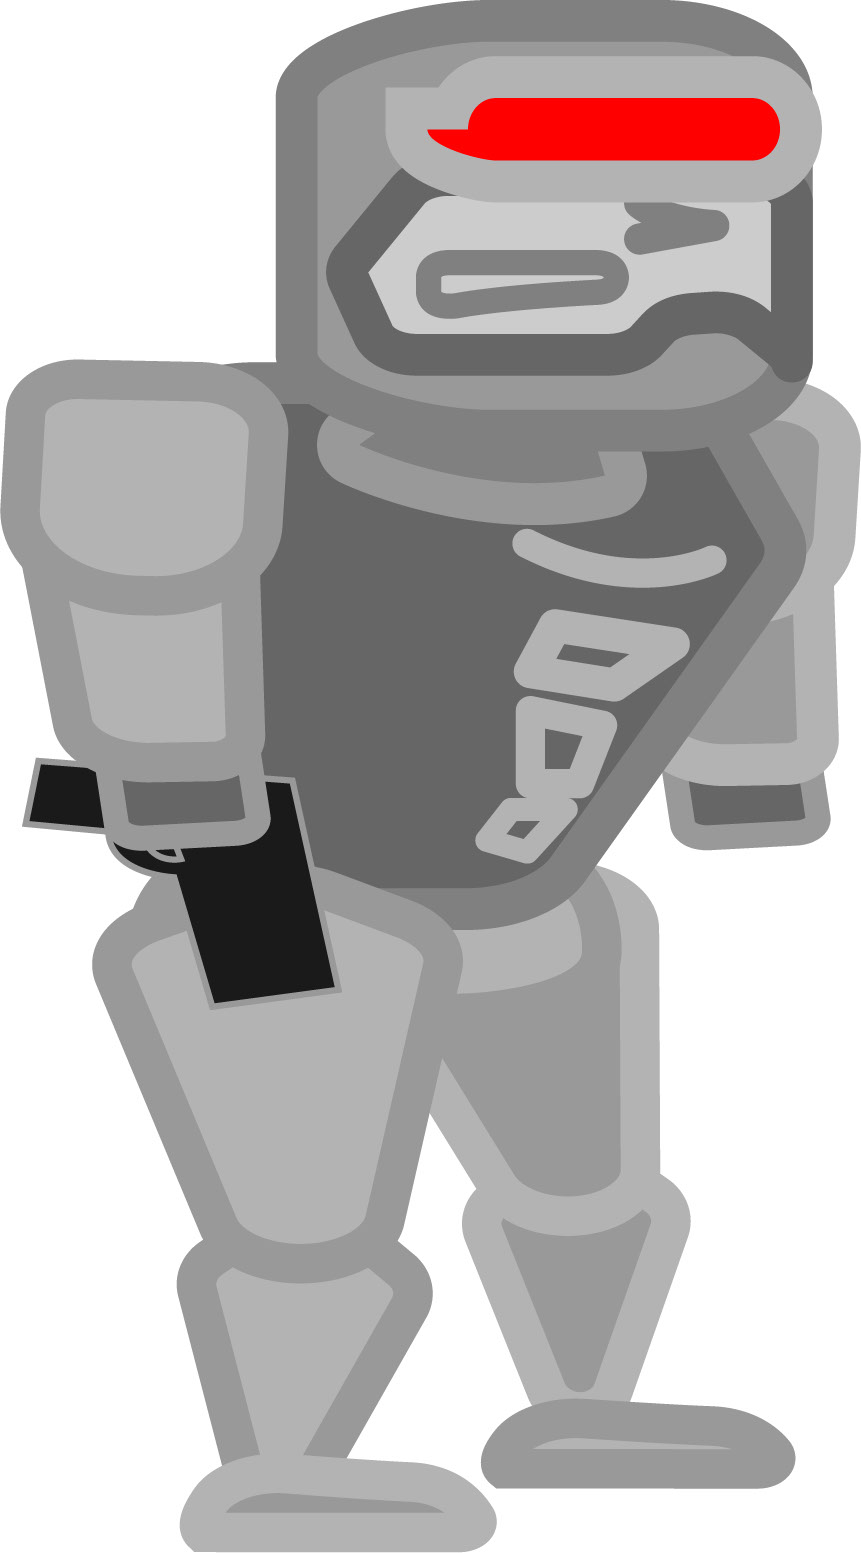 Robocop rendition image